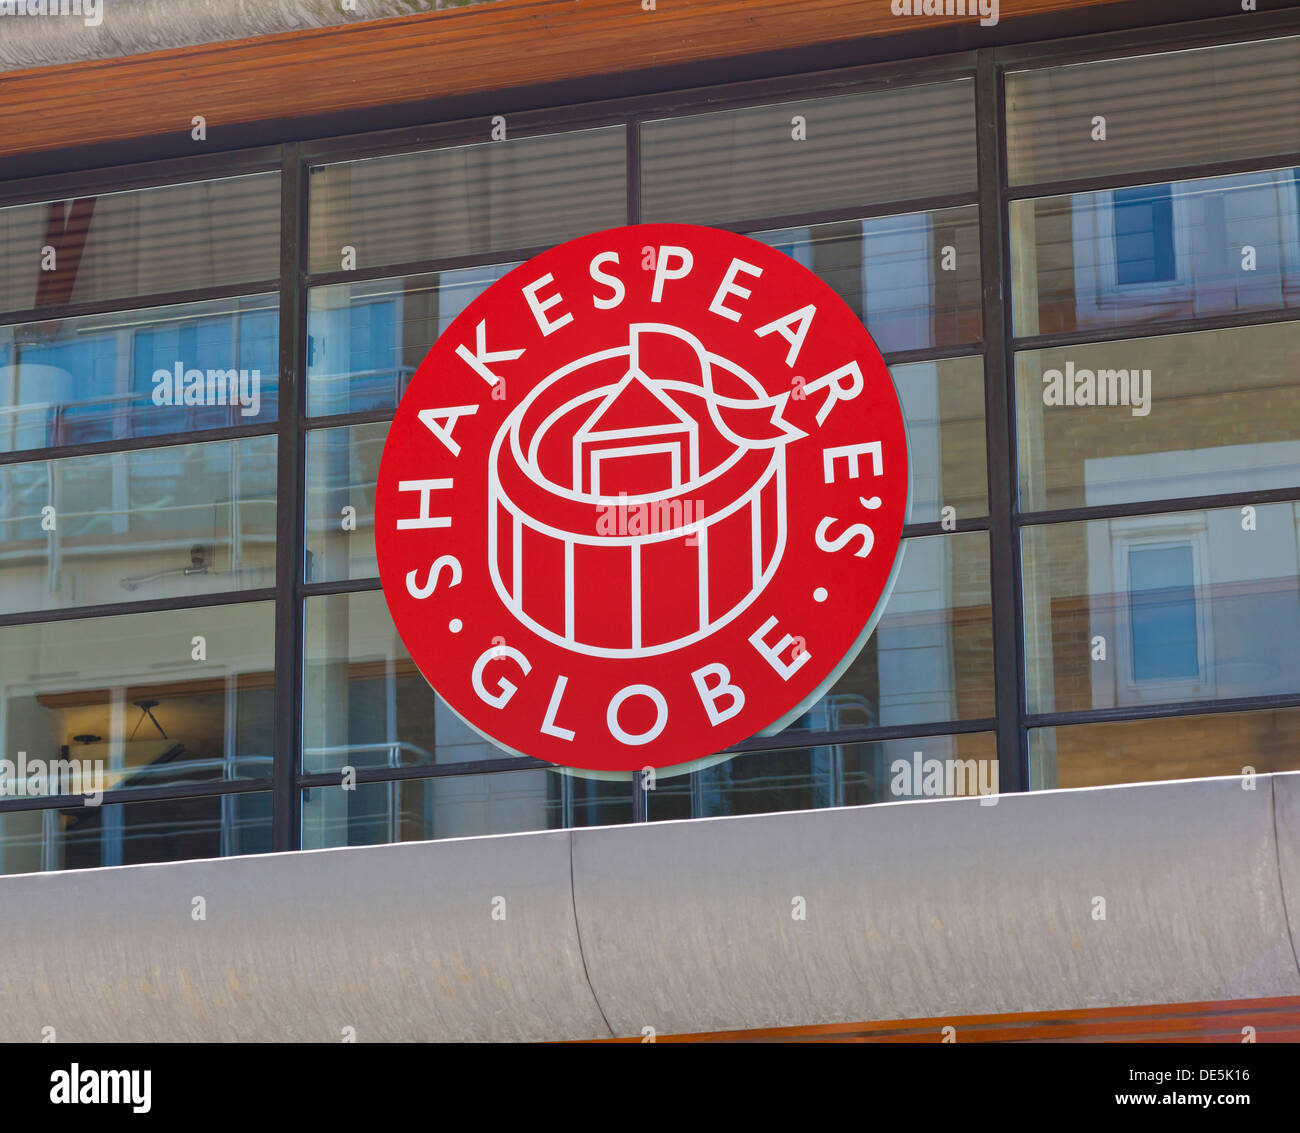 Shakespeare's globe theatre sign Stock Photo